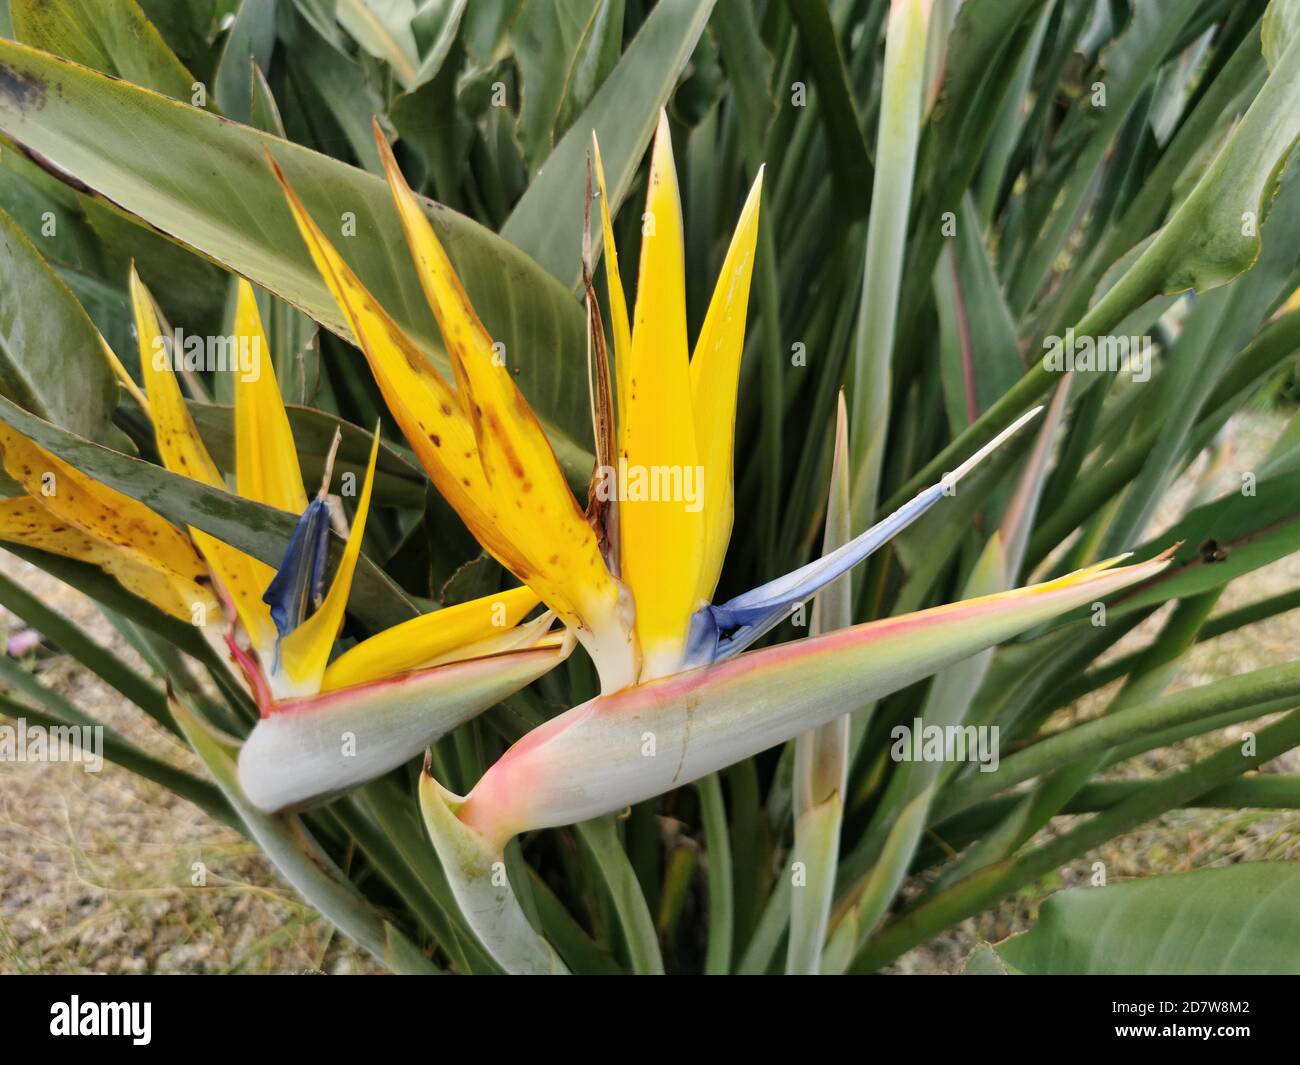 Closeup shot of strelitzia reginae or birds of paradise flowers grown in a garden Stock Photo